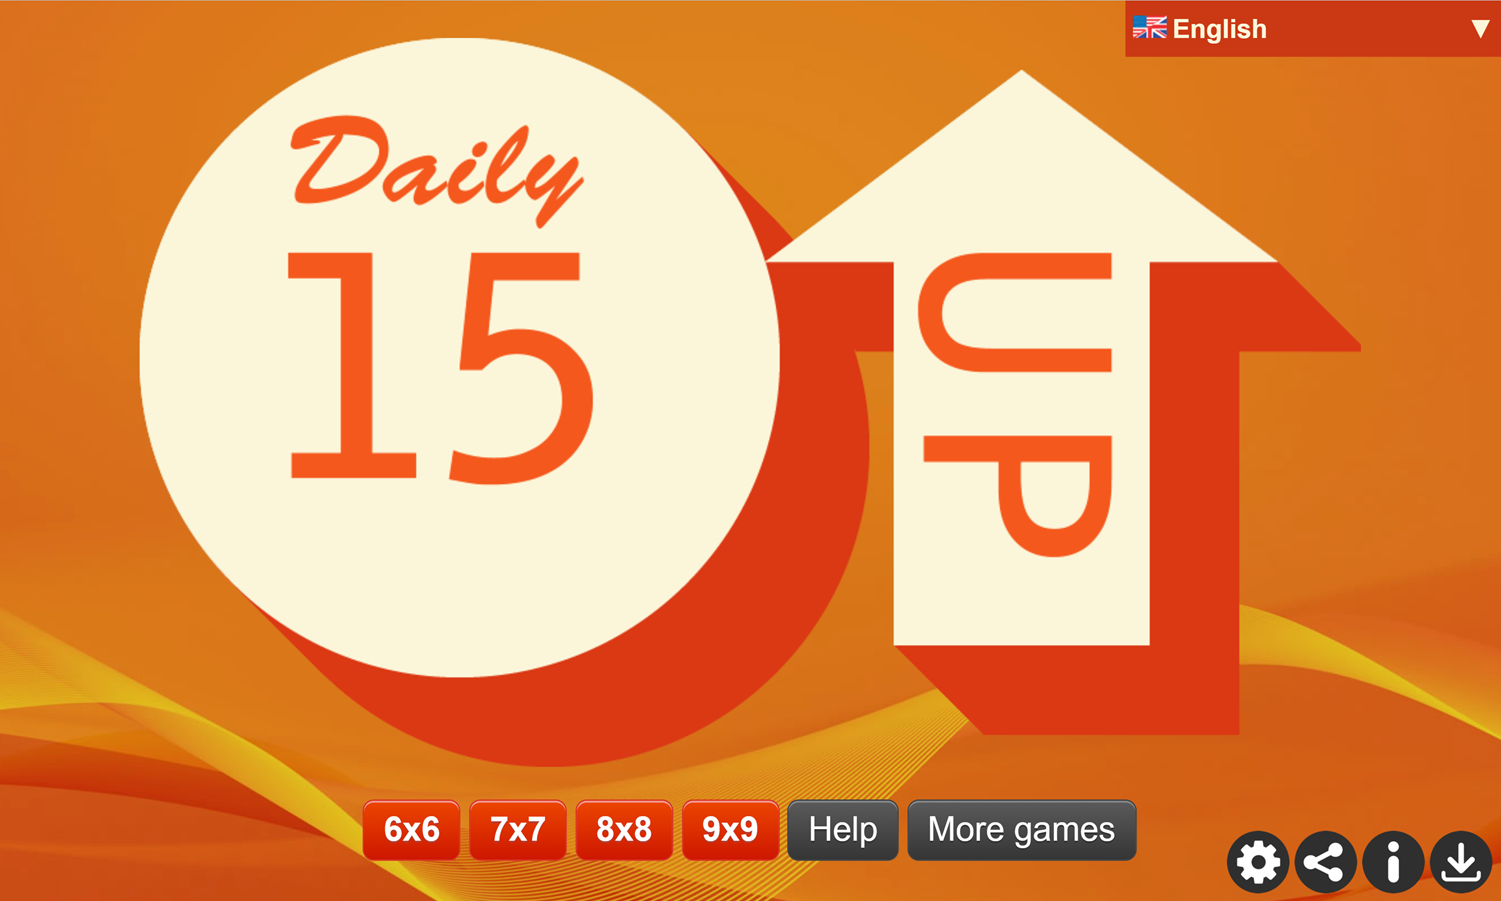 Daily 15 Up Game Welcome Screen Screenshot.